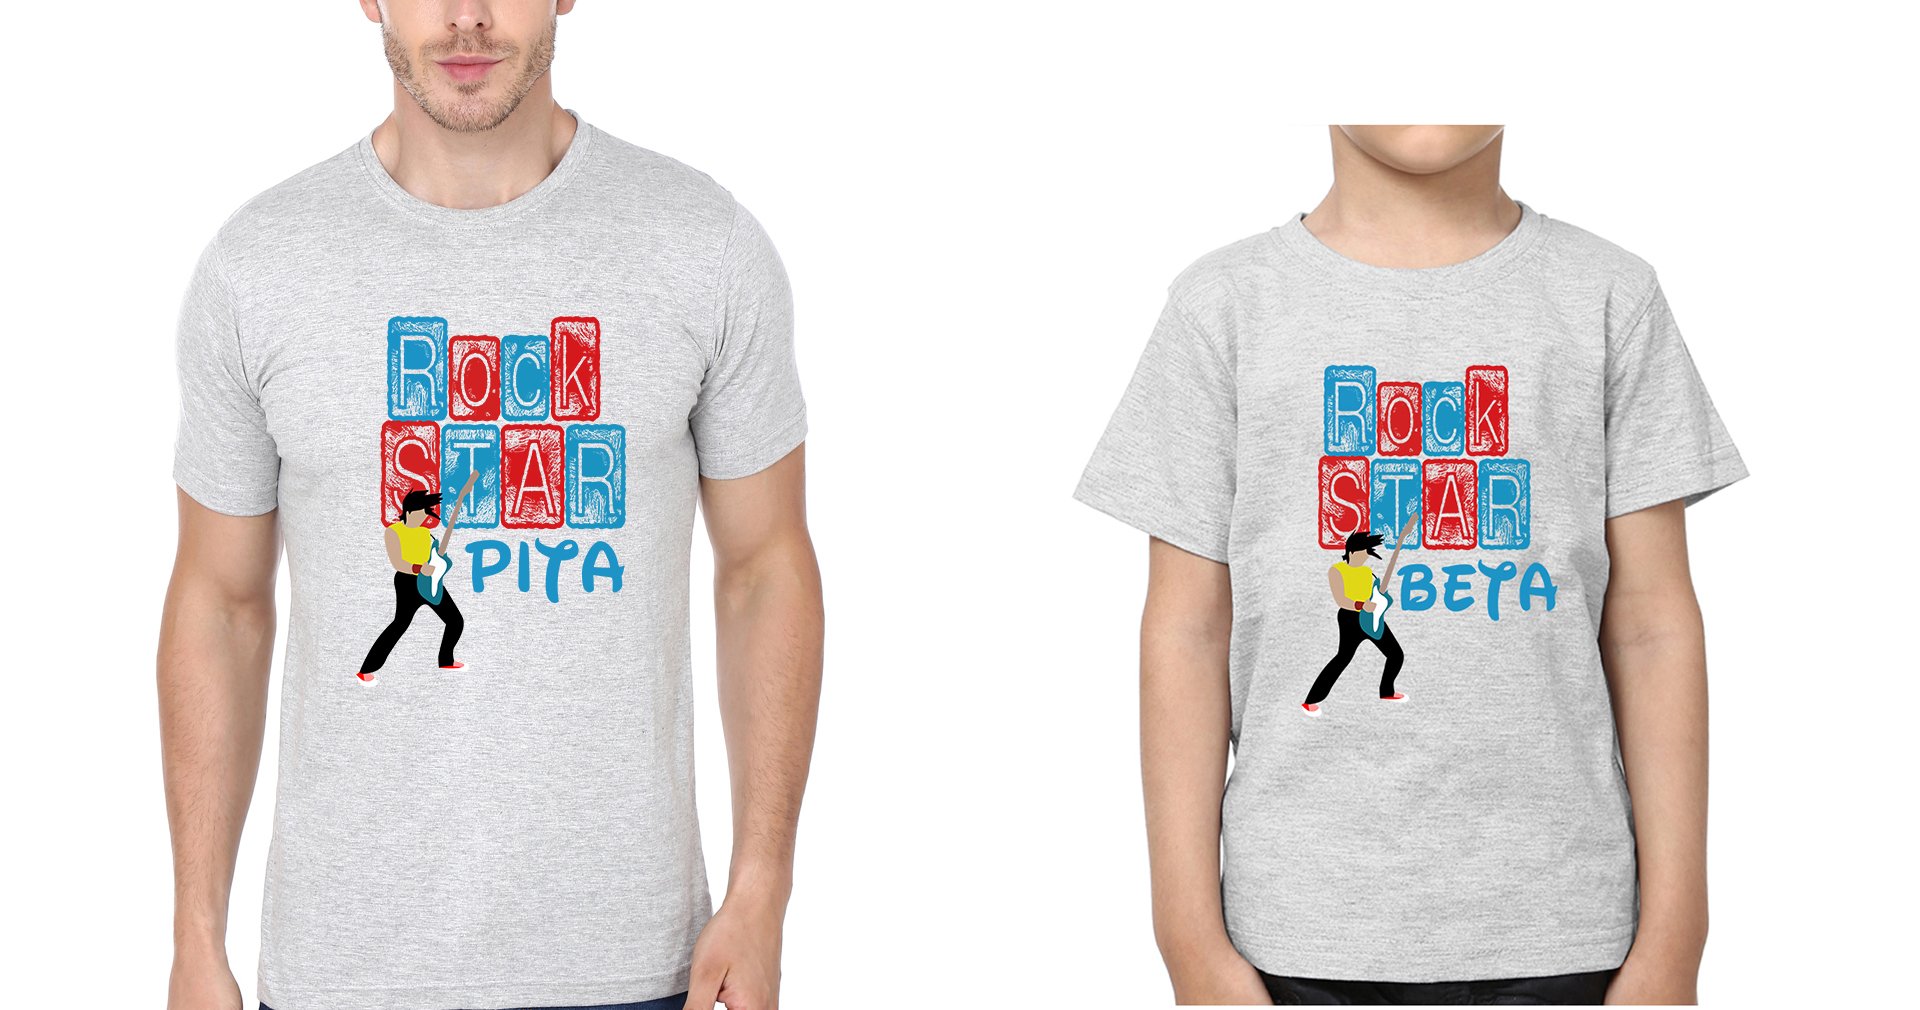 Rockstar Pita Rockstar Beta Father and Son Matching T-Shirt- FunkyTeesClub